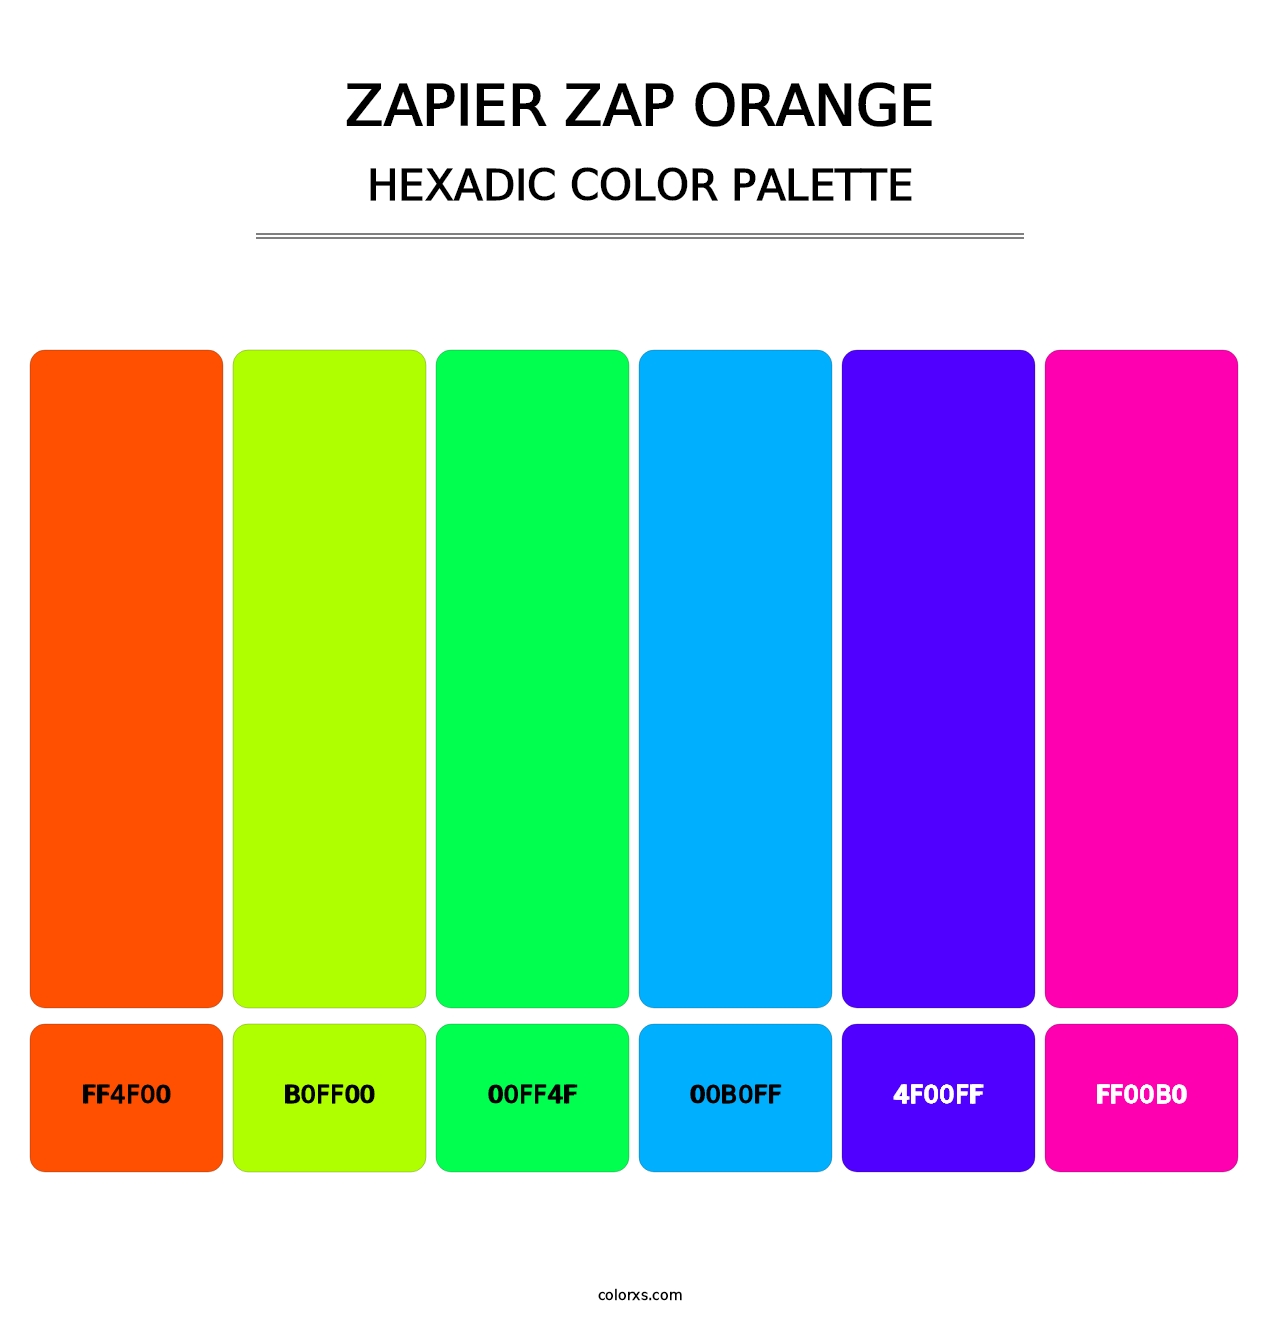 Zapier Zap Orange - Hexadic Color Palette